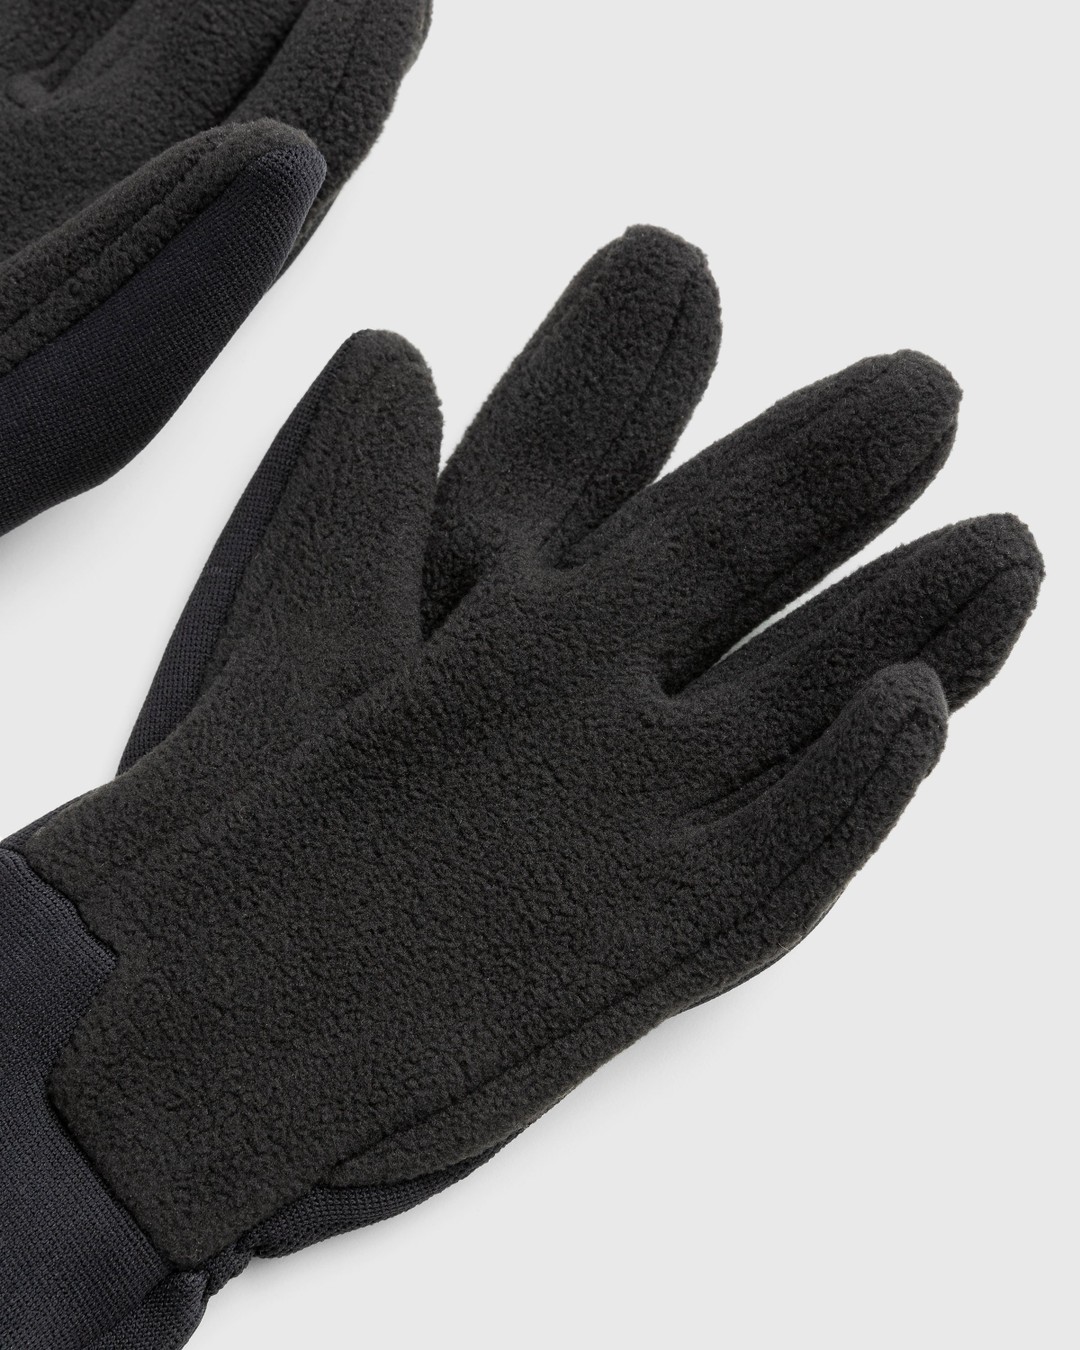 C.P. Company – Seamless Gloves Black - 5-Finger - Black - Image 4